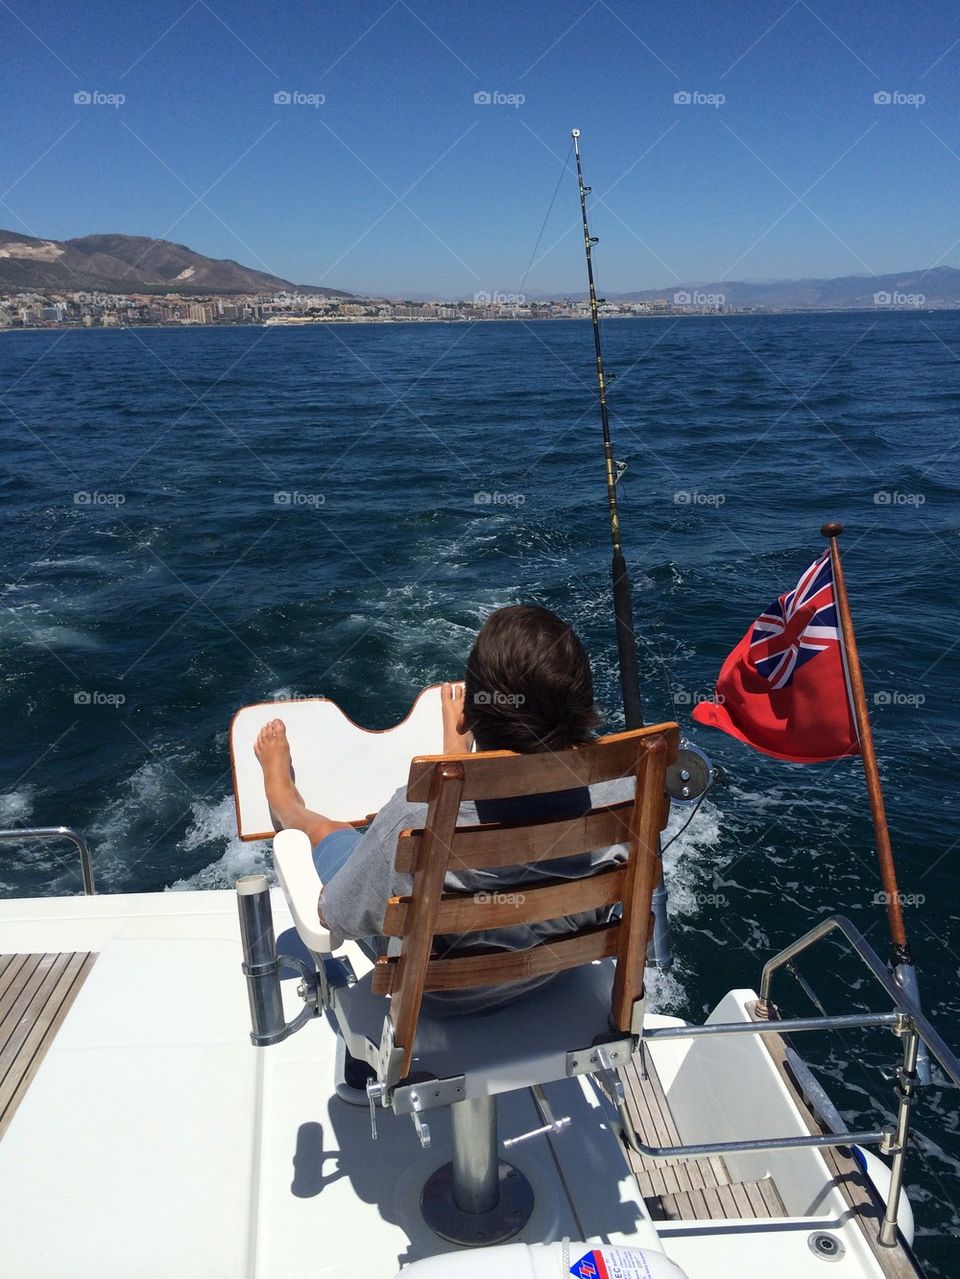 Sailing in the Mediterranean Sea